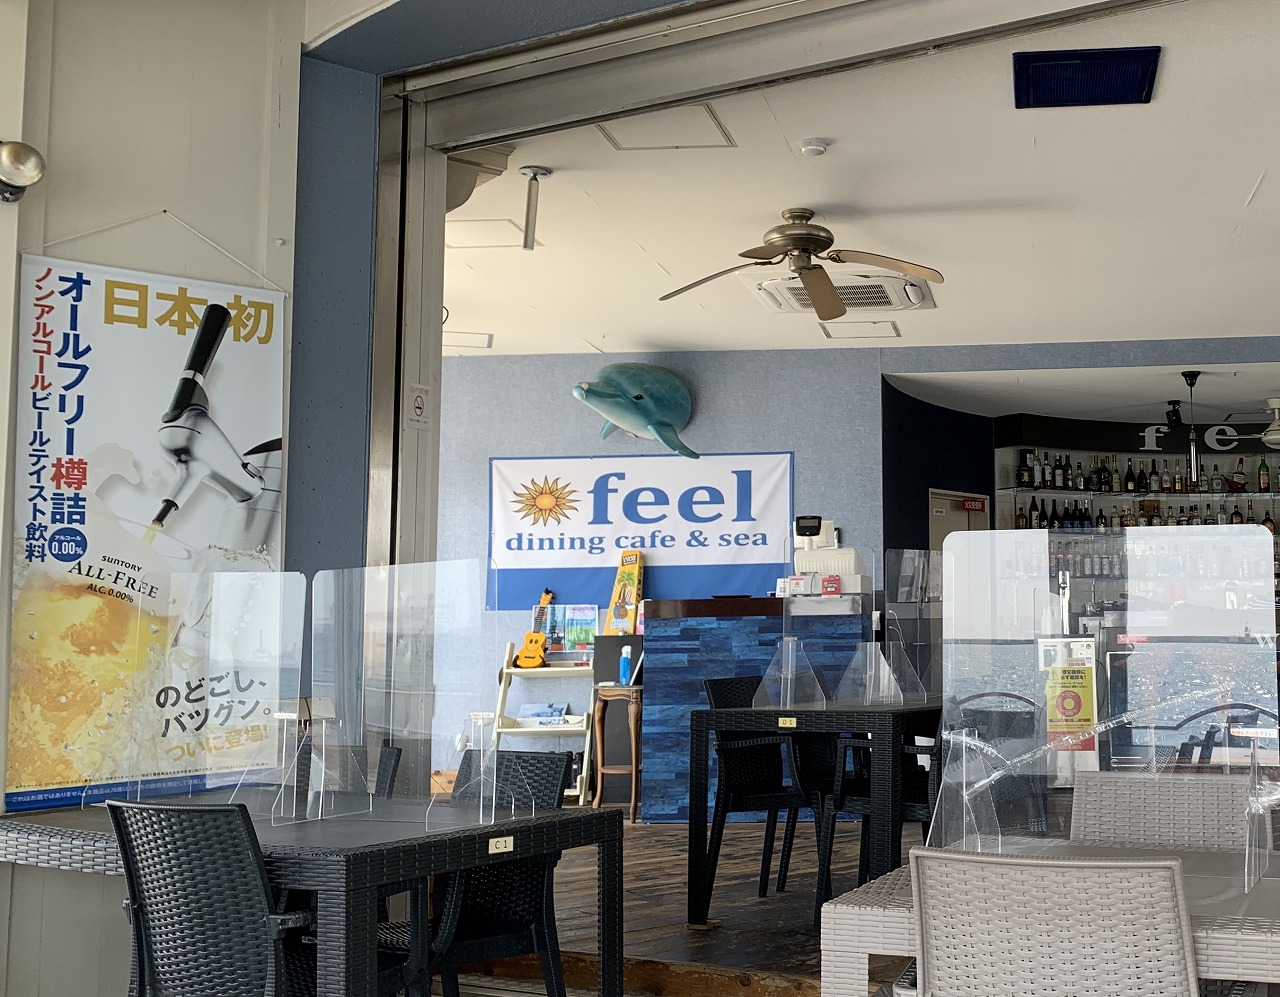 feel dining cafe & sea